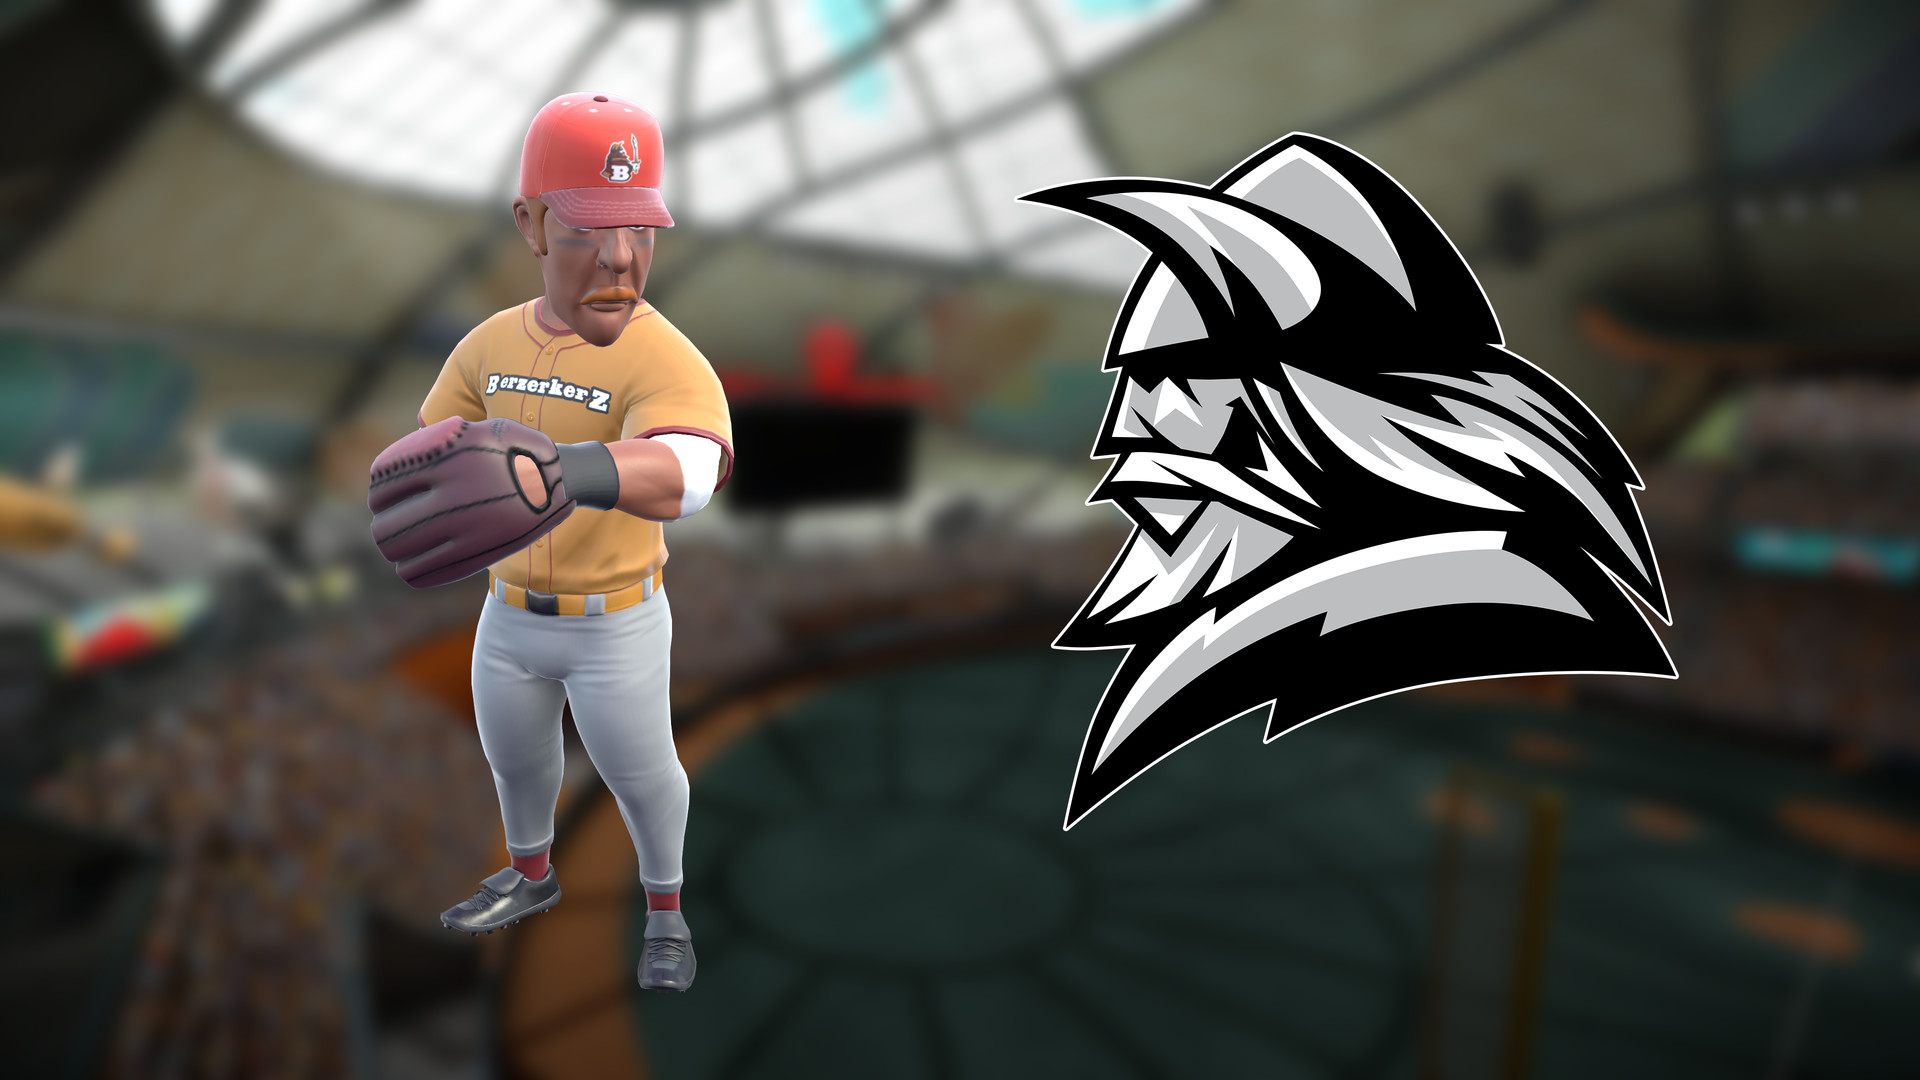 Dunder Mufflin Custom Baseball Team Created in Super Mega Baseball 2 Video  Game - super mega baseball 2 post - Imgur